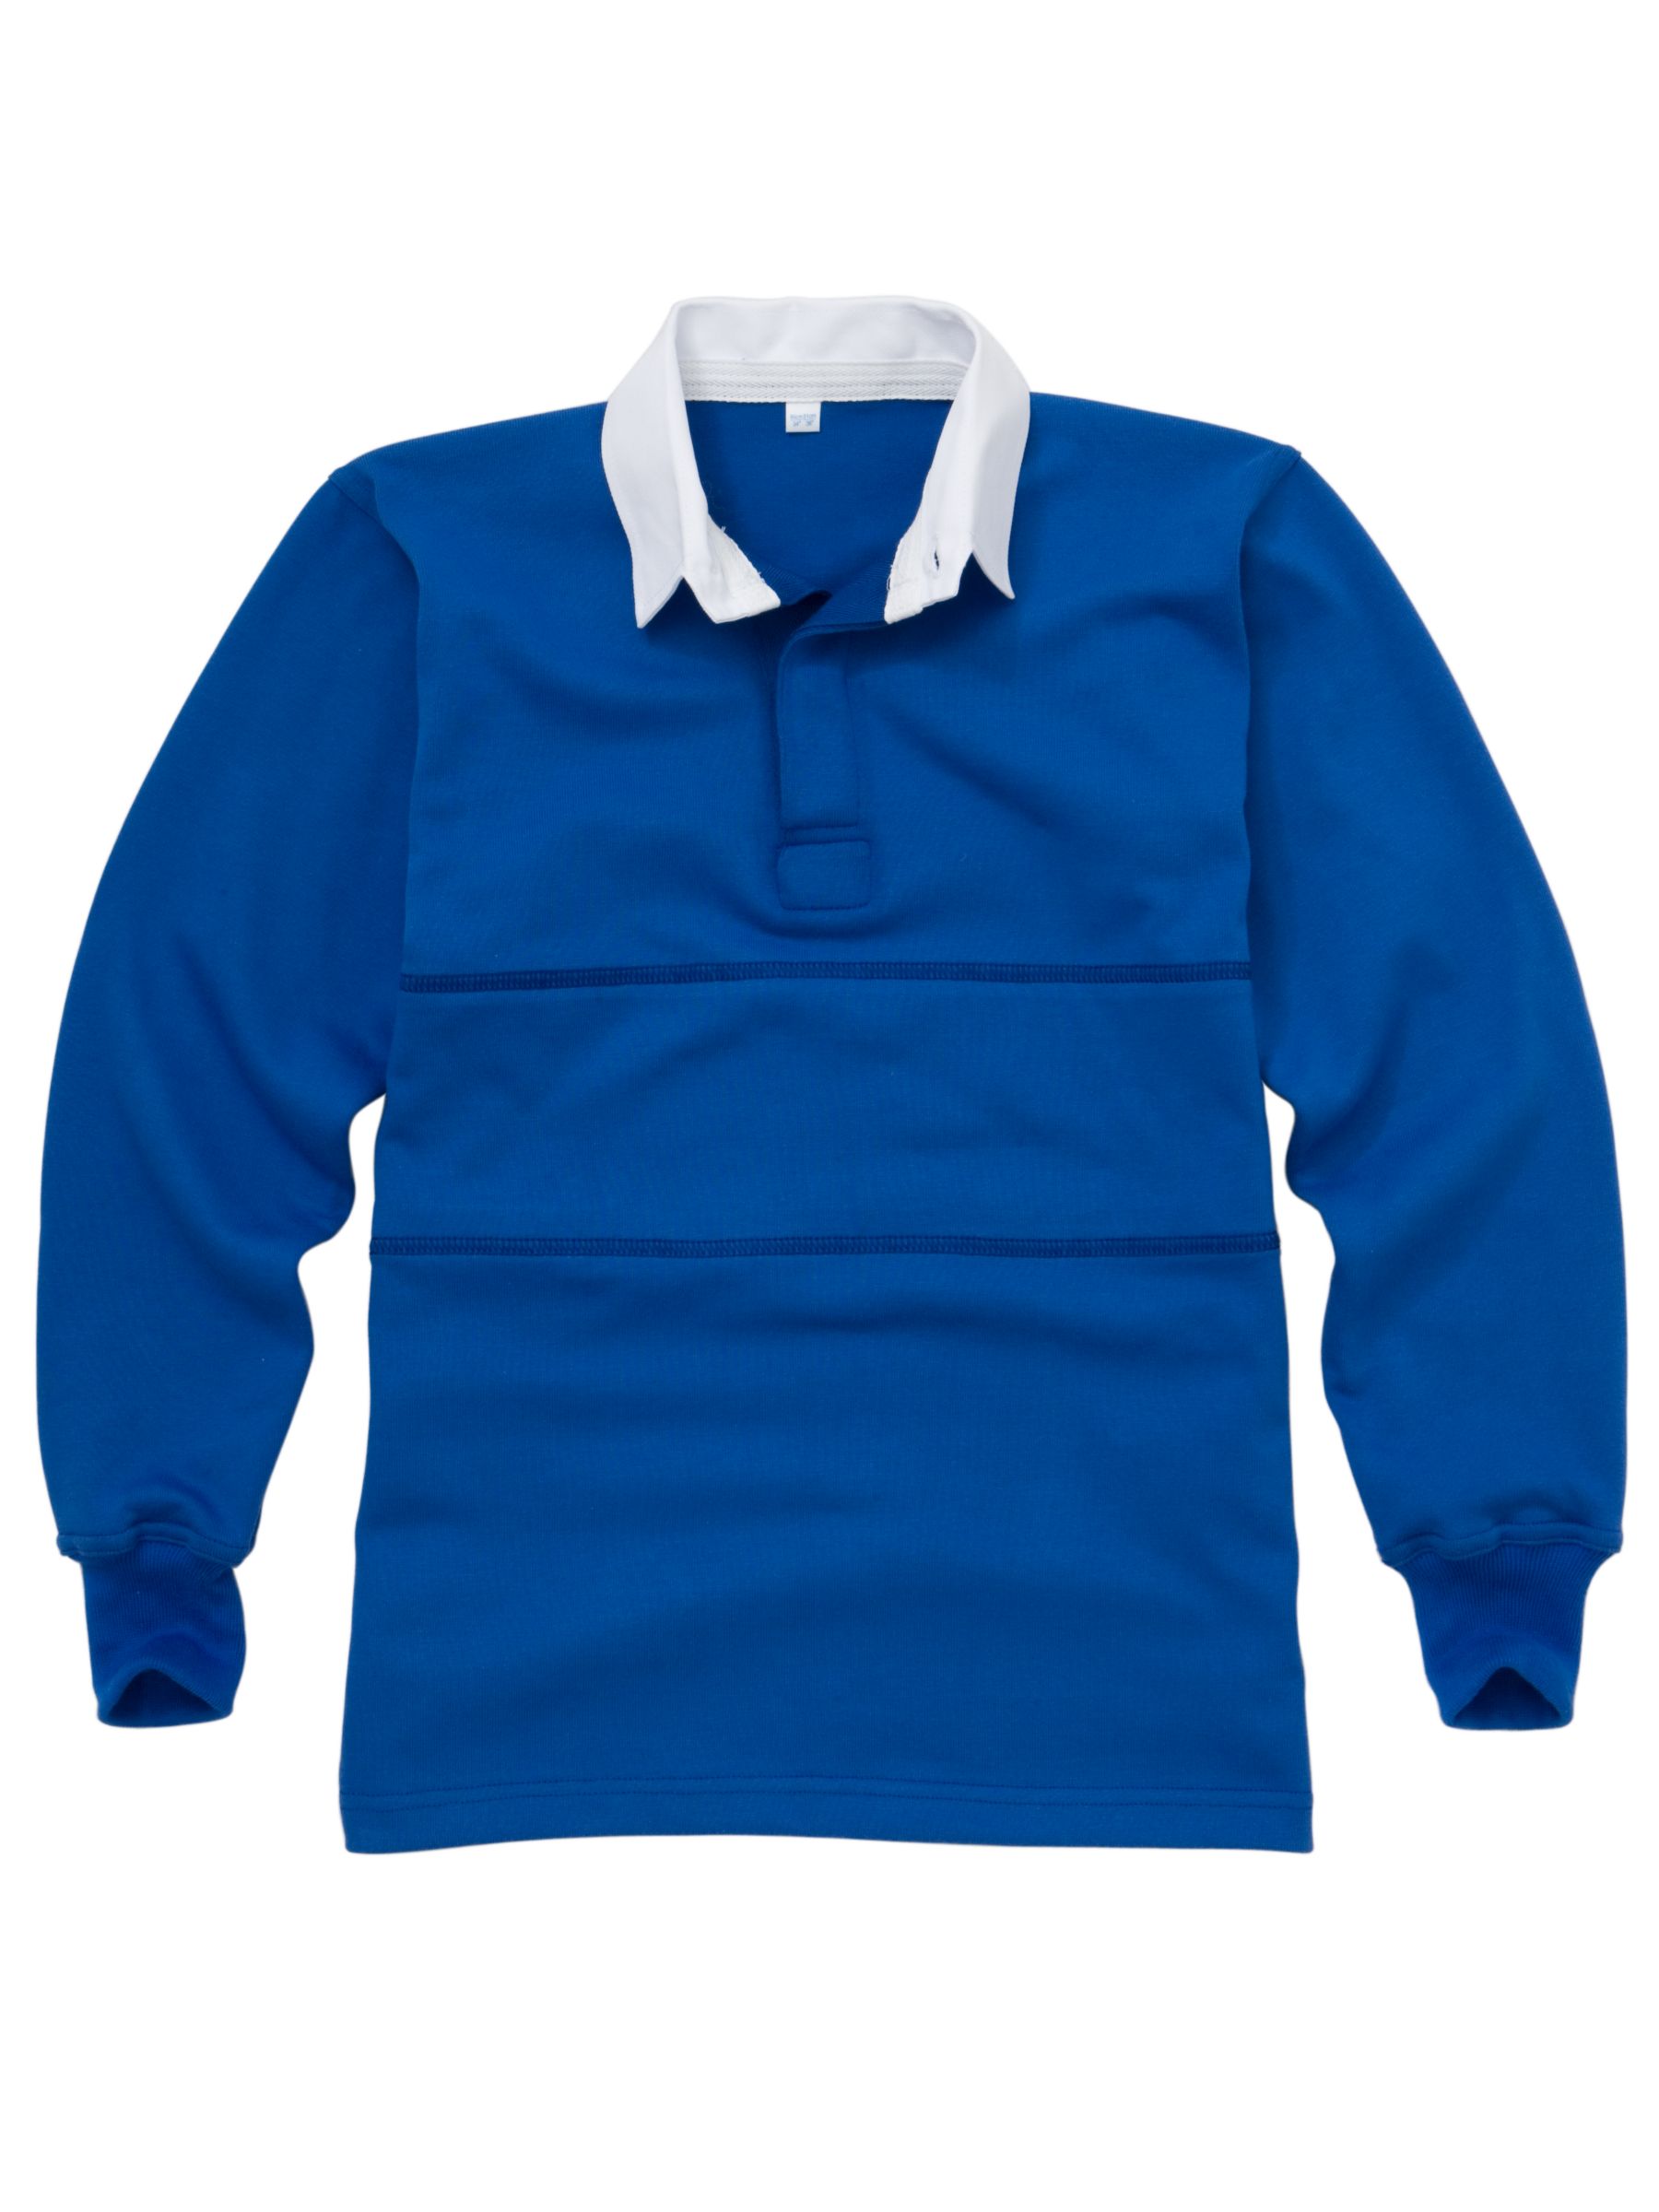 School Sports Rugby Shirt, Royal Blue